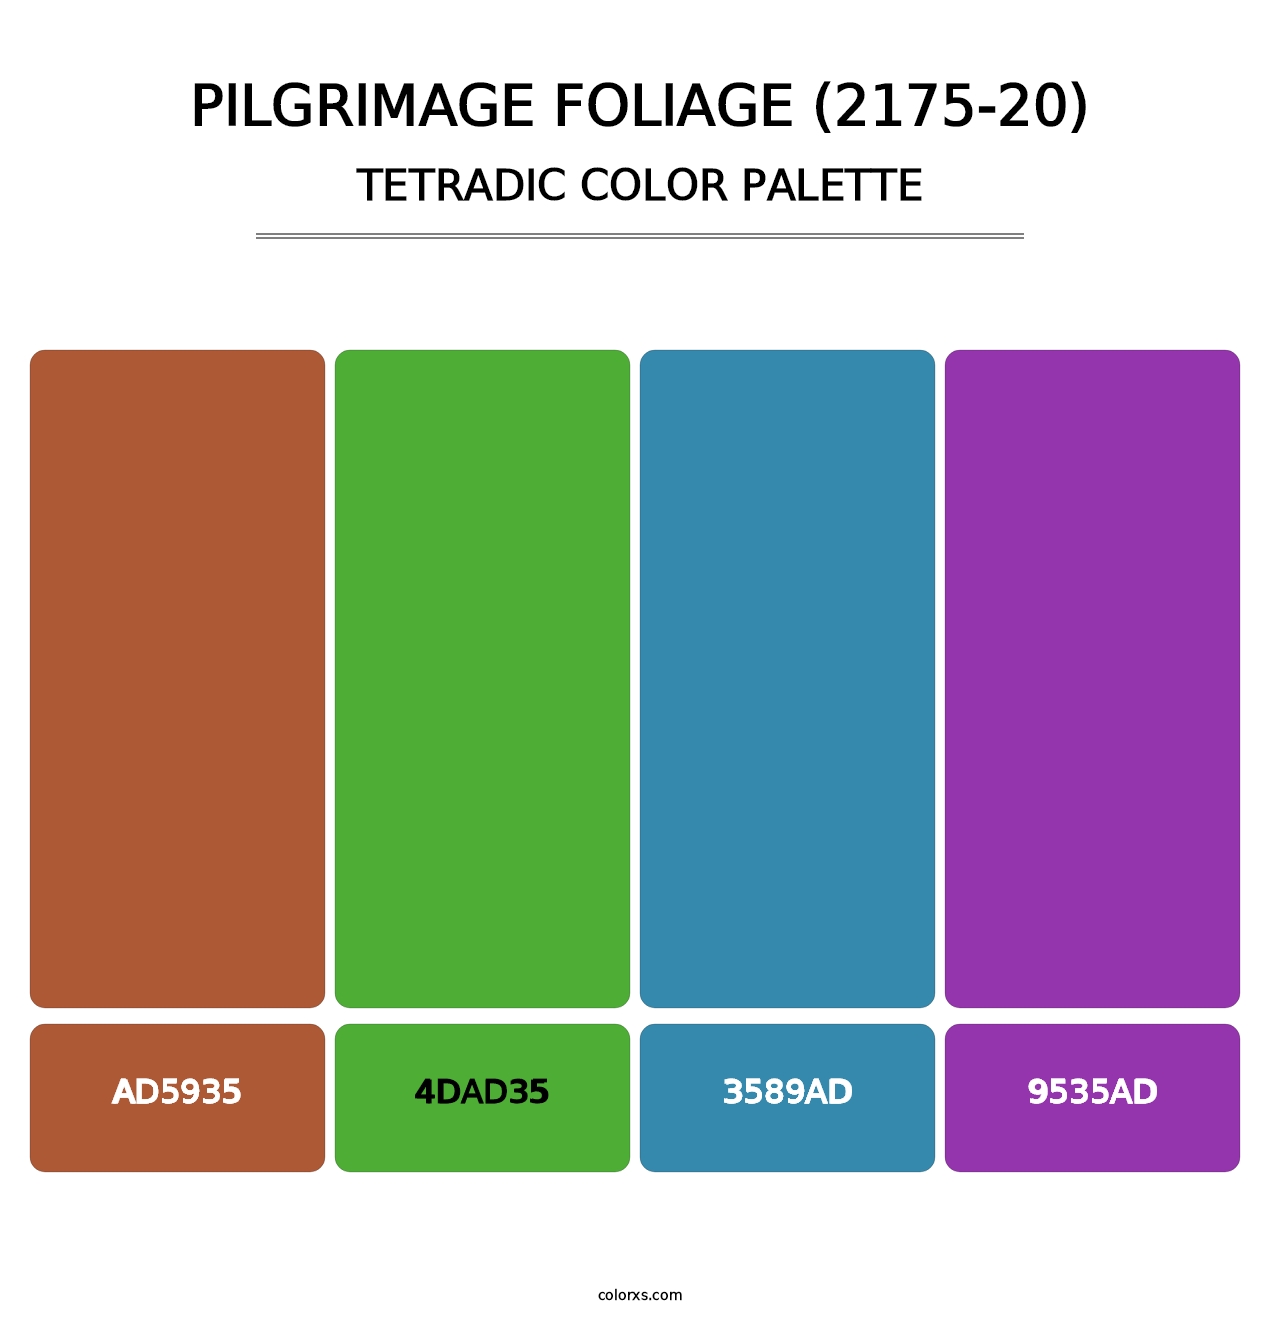 Pilgrimage Foliage (2175-20) - Tetradic Color Palette